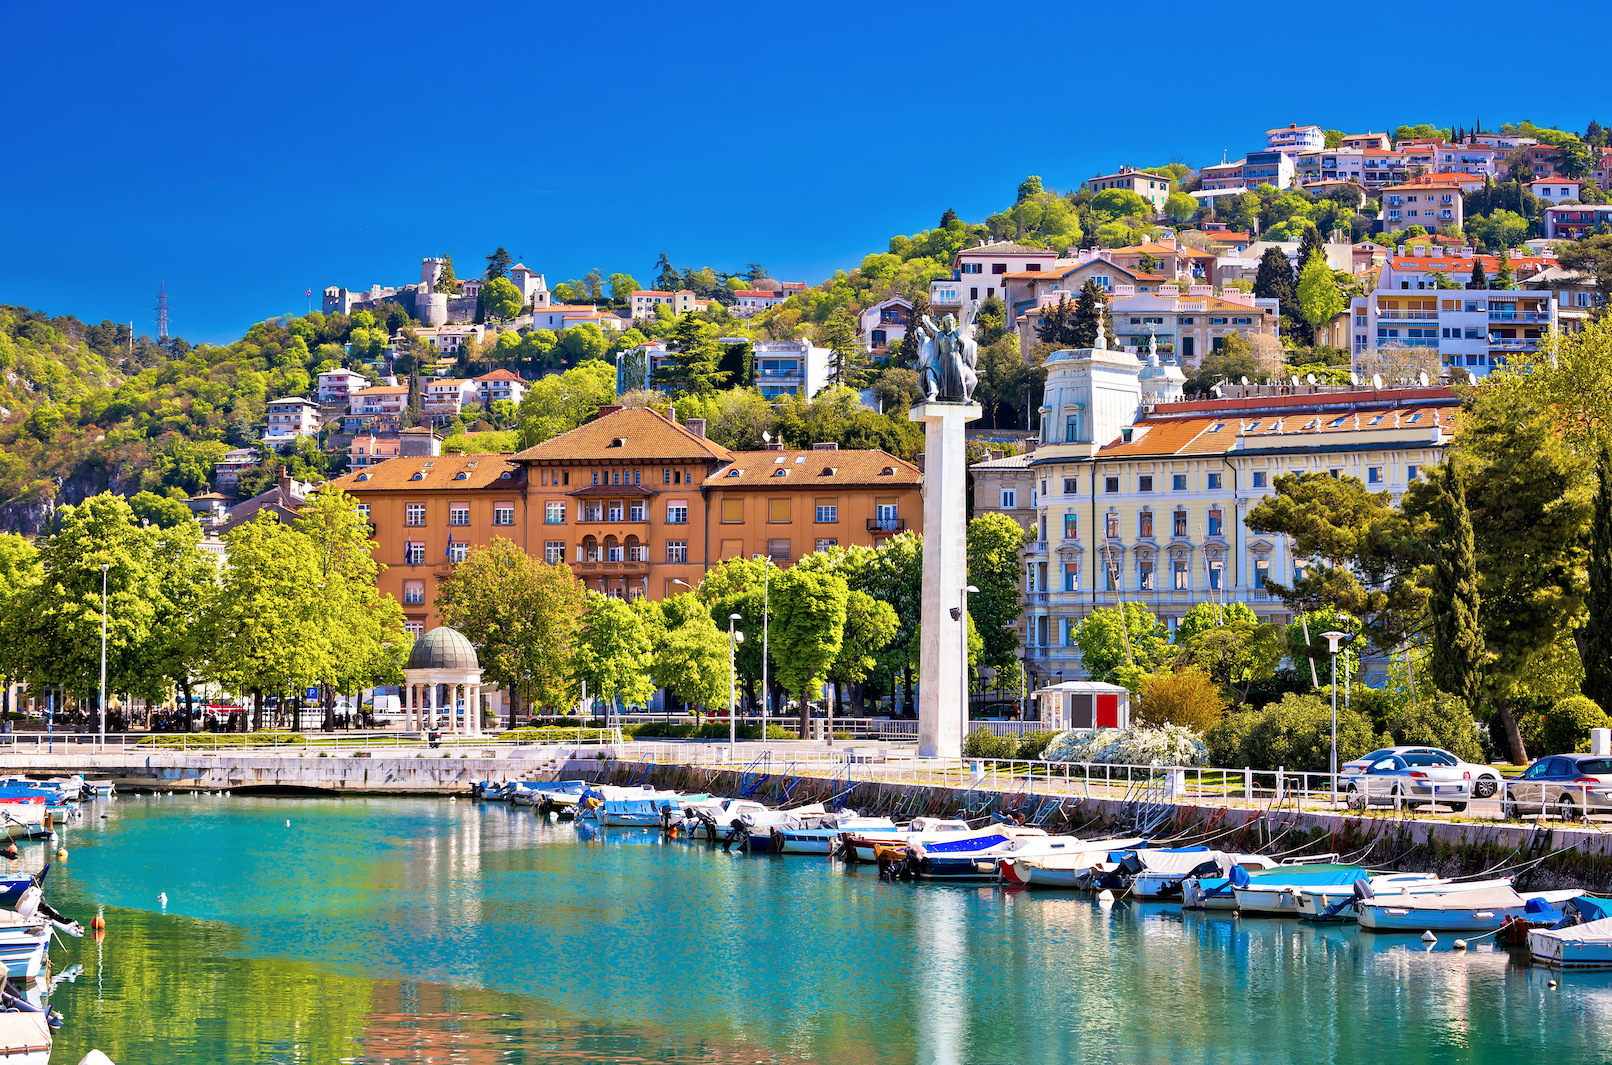 Sunny view of the port of Rijeka in Croatia, a European Capital of Culture 2020.